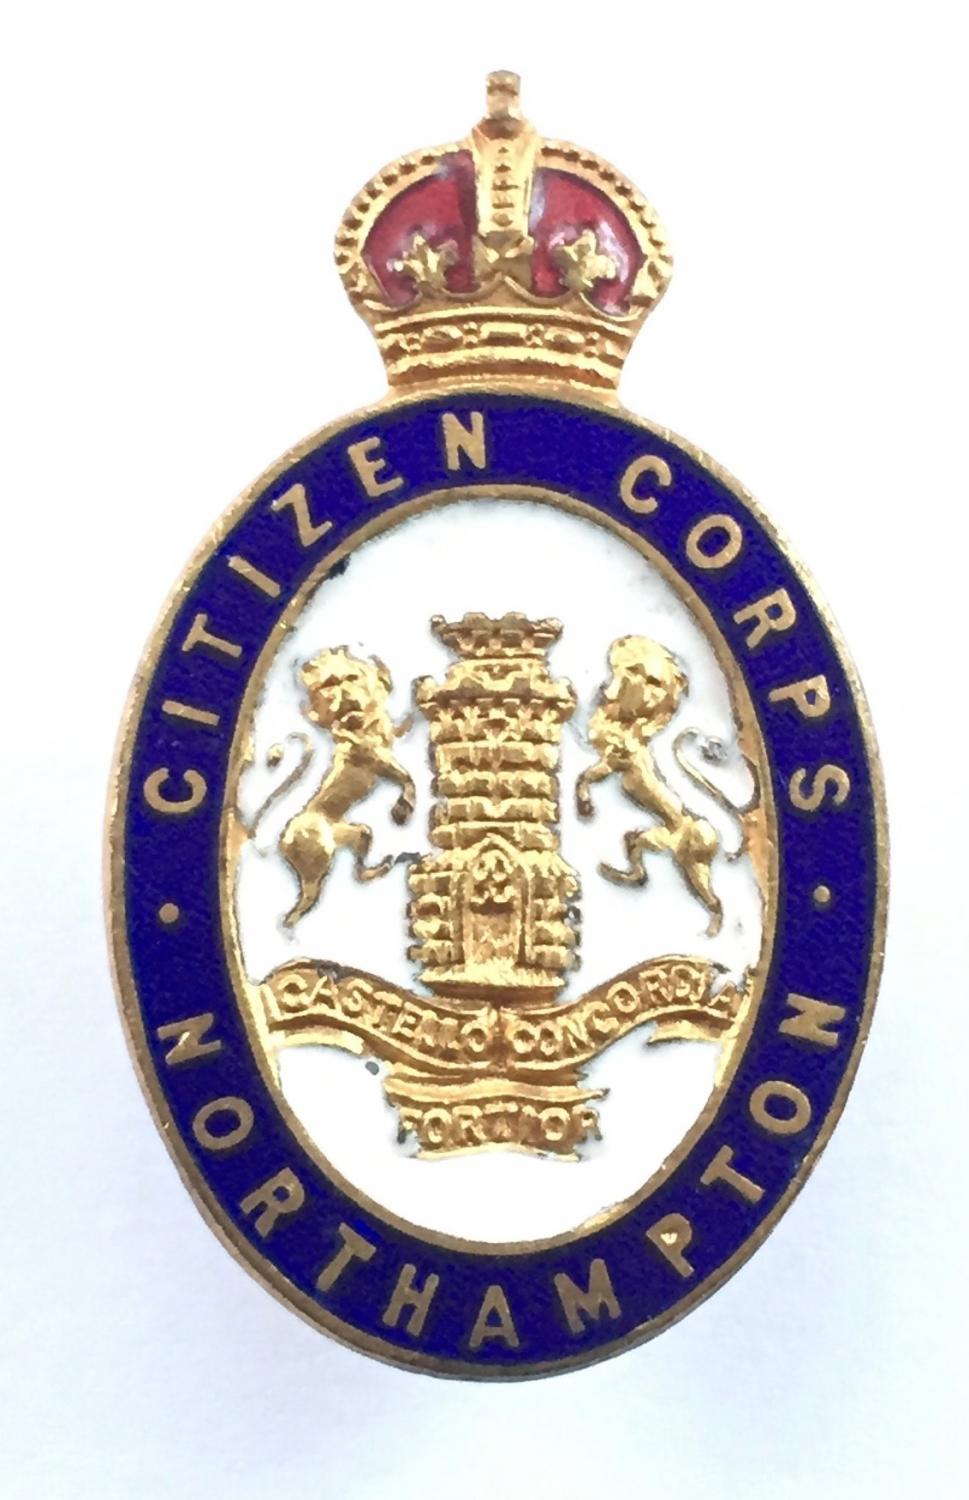 Northampton Citizen Corps WW1 VTC cap badge